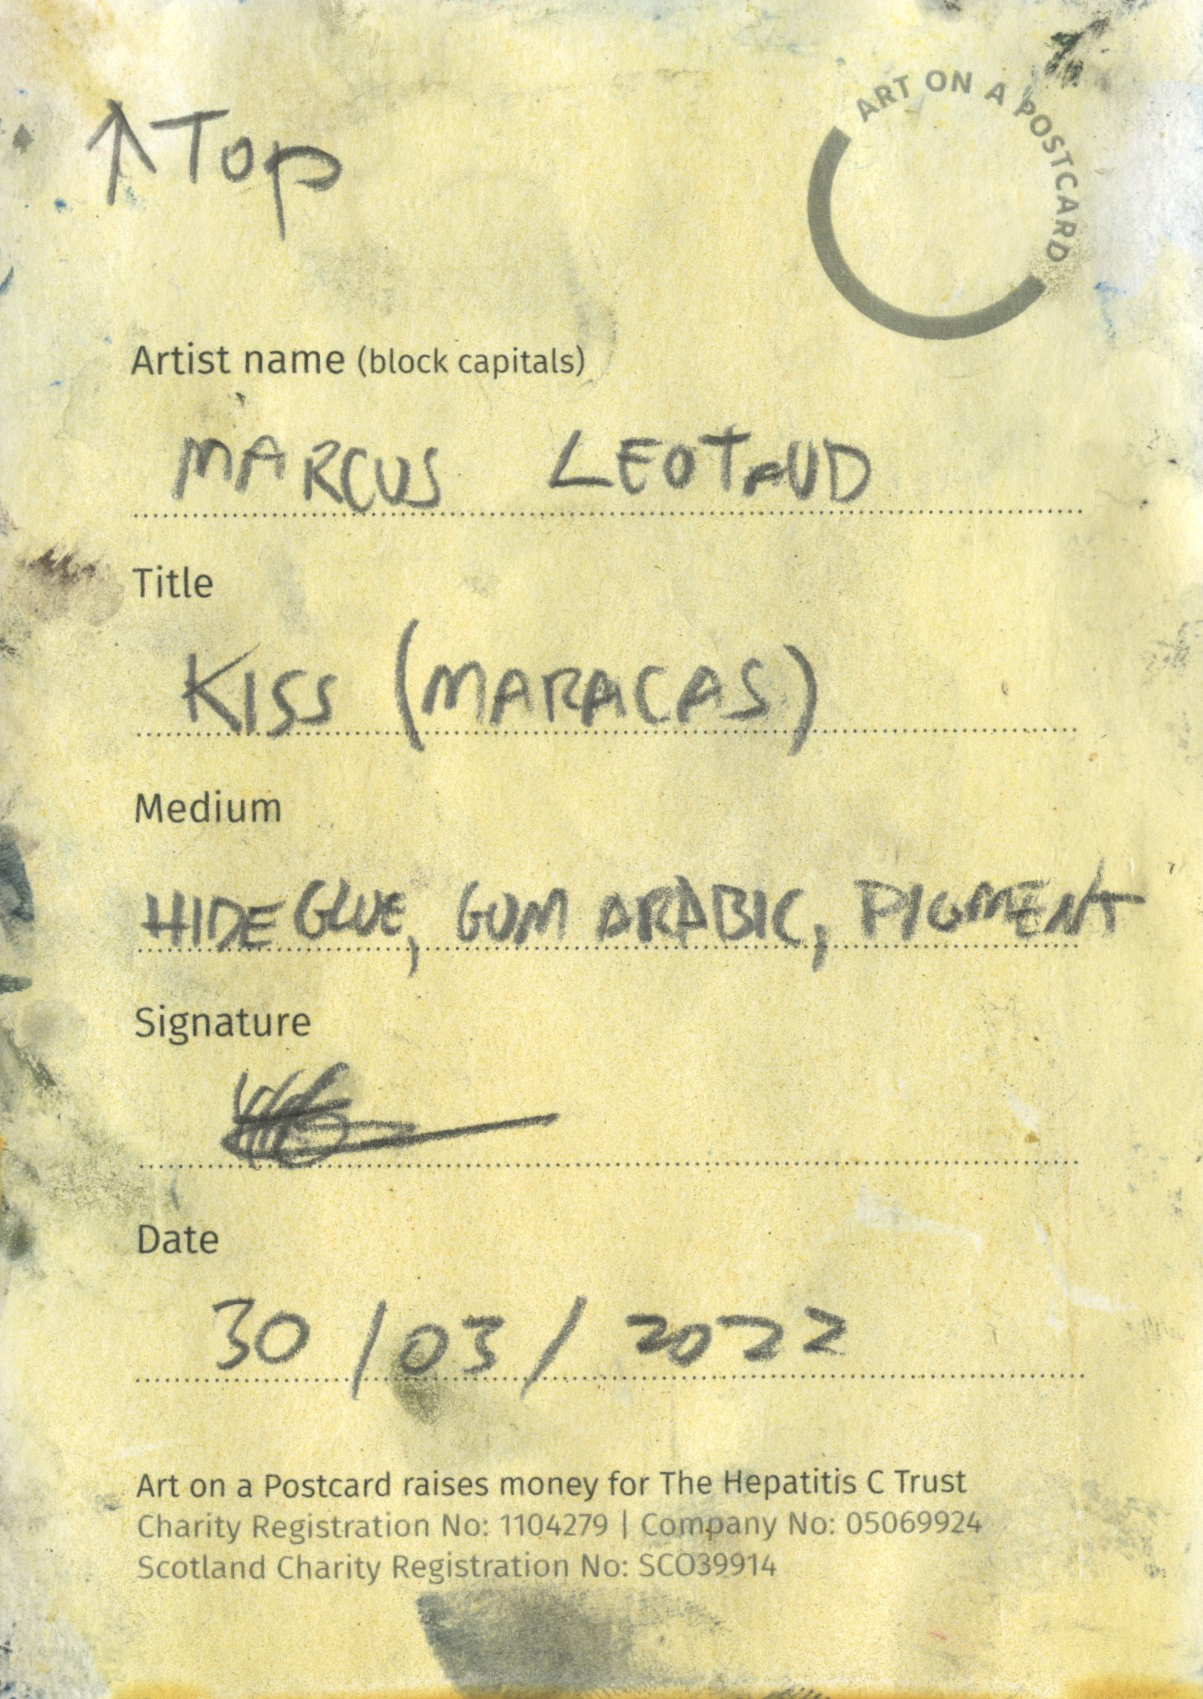 44. Marcus Leotaud - Kiss (Maracas) - BACK